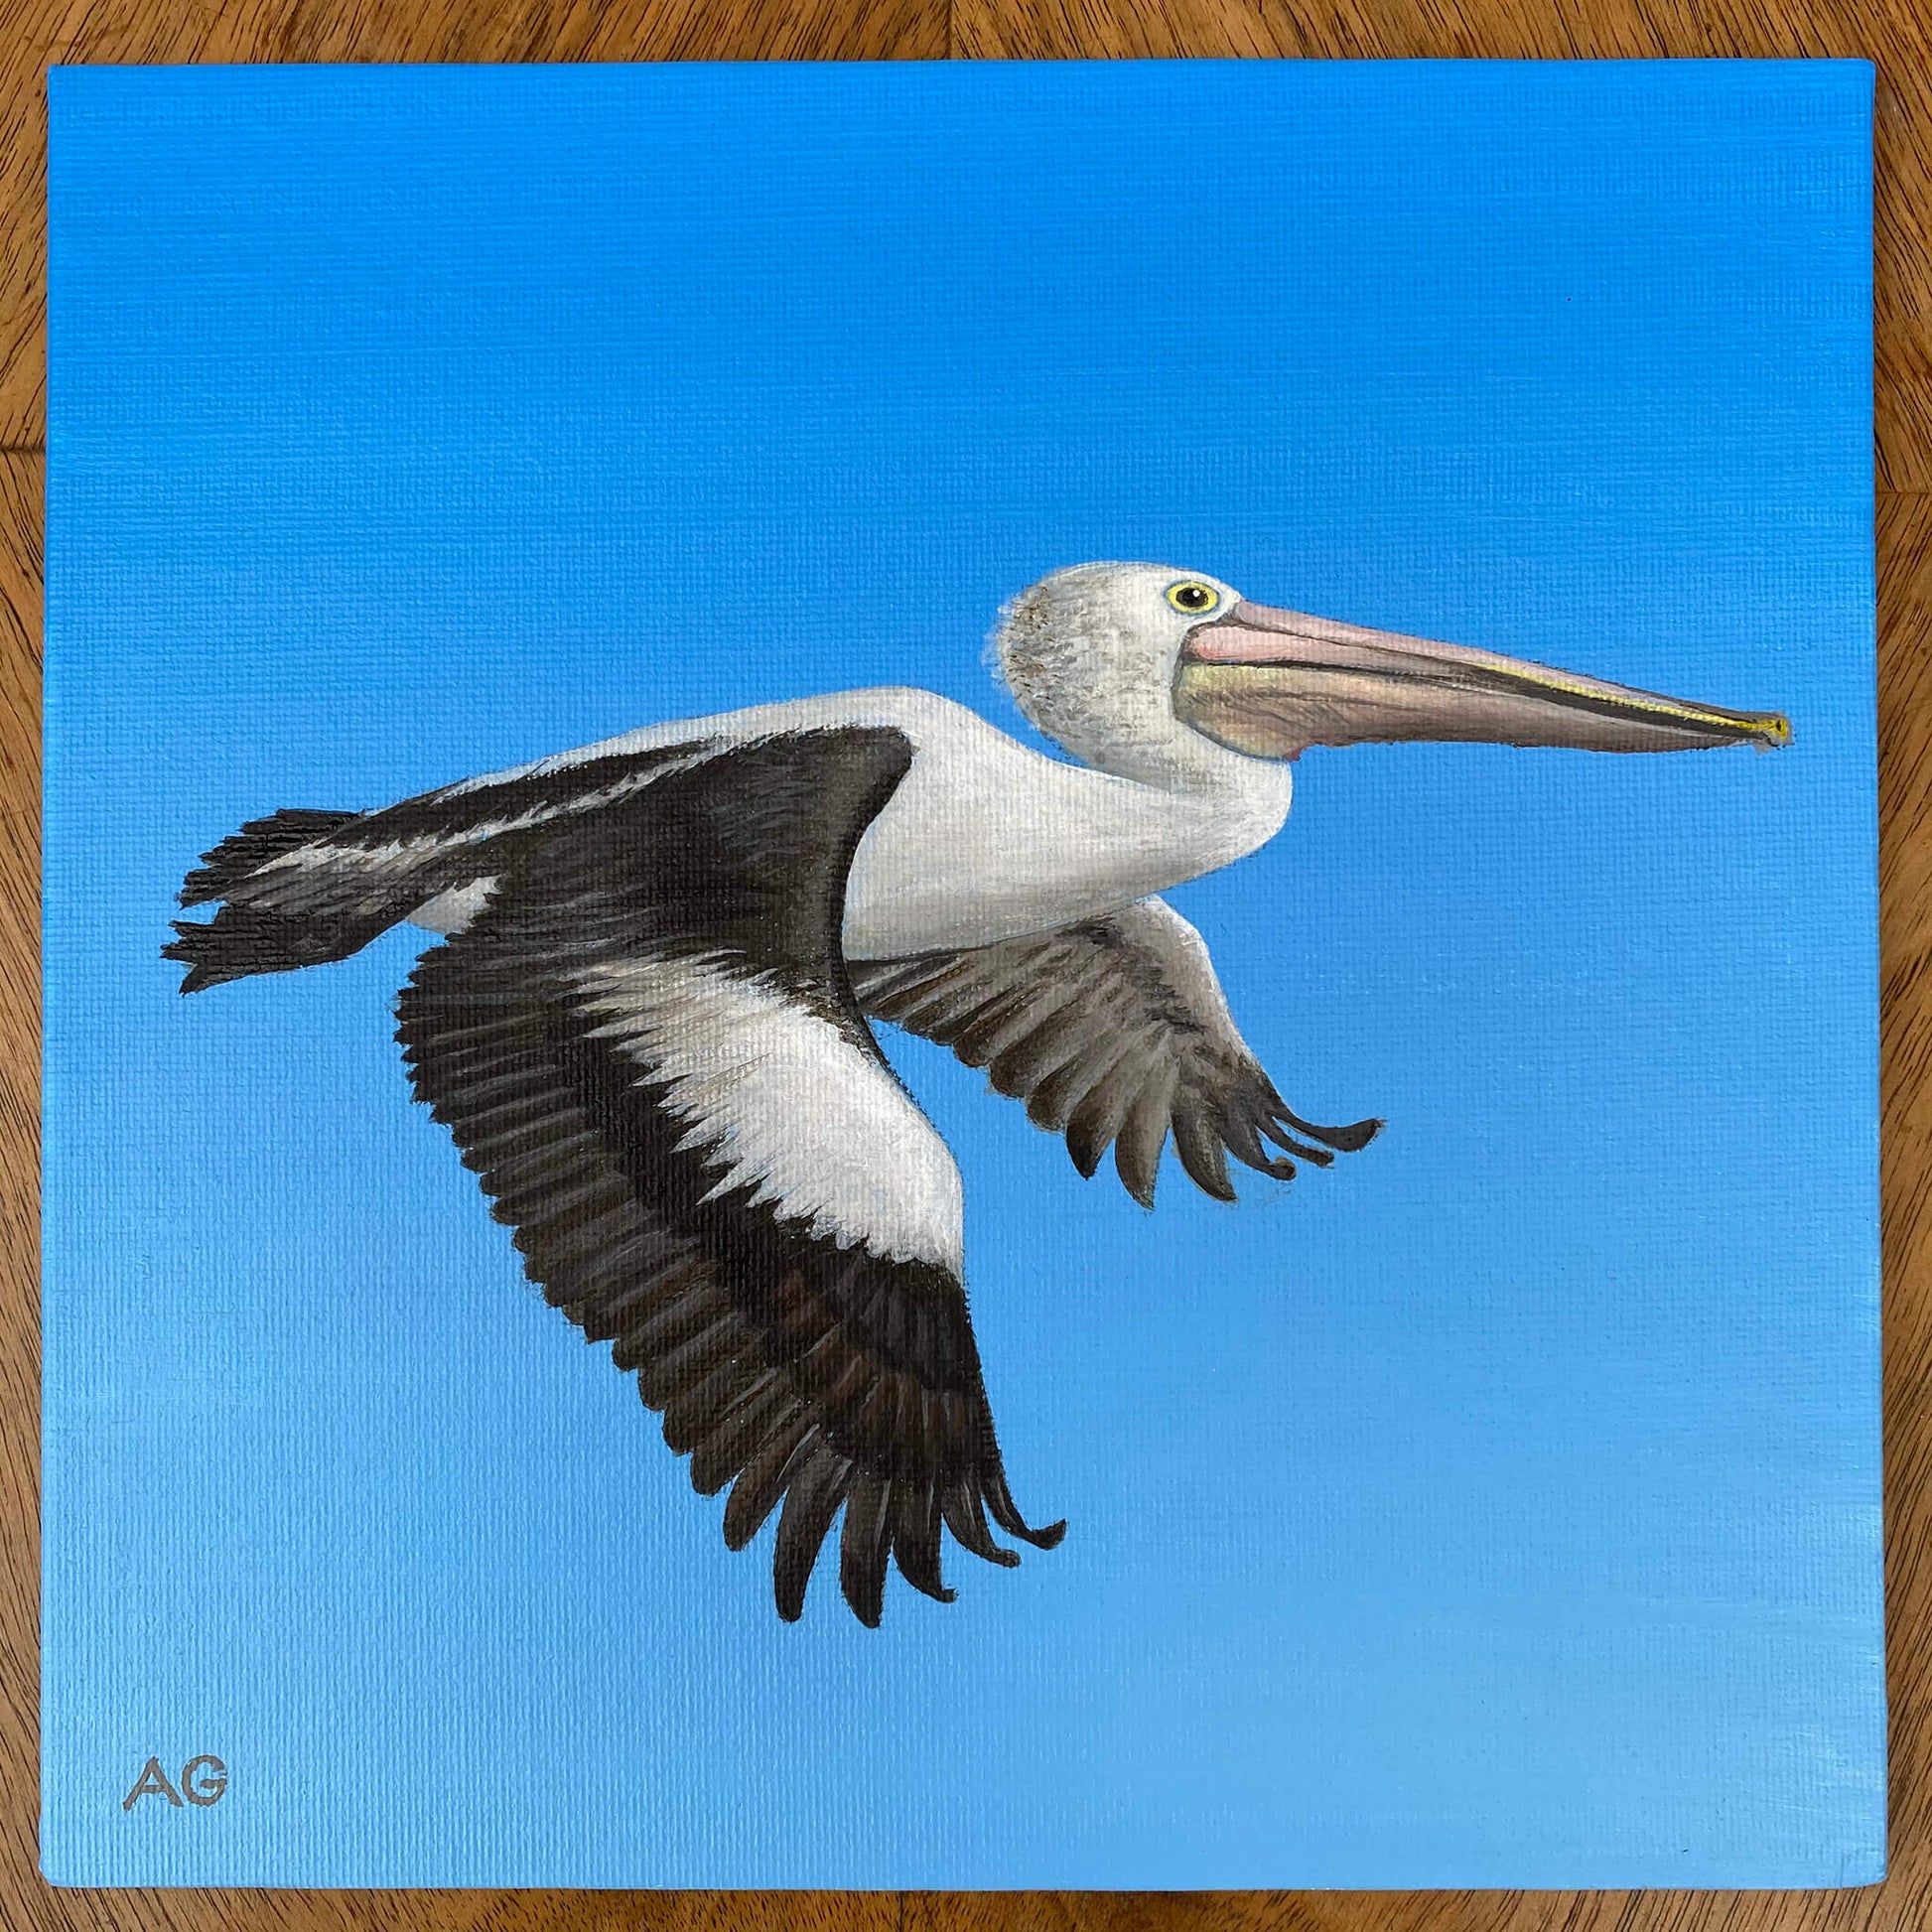 Pelican in flight painting by Amanda Gosse. Original acrylic artwork on canvas panel full. 